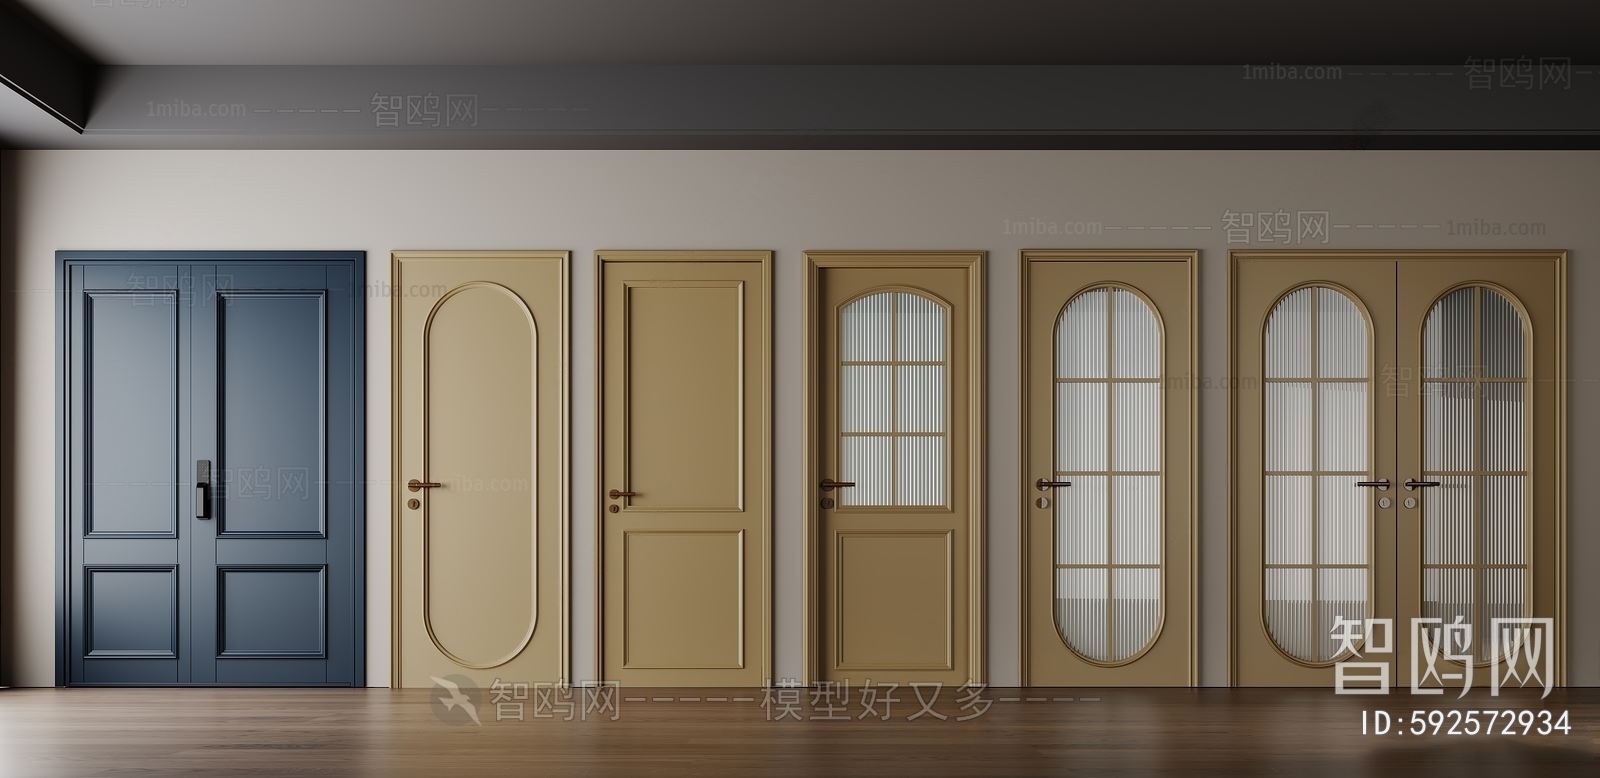 French Style Single Door